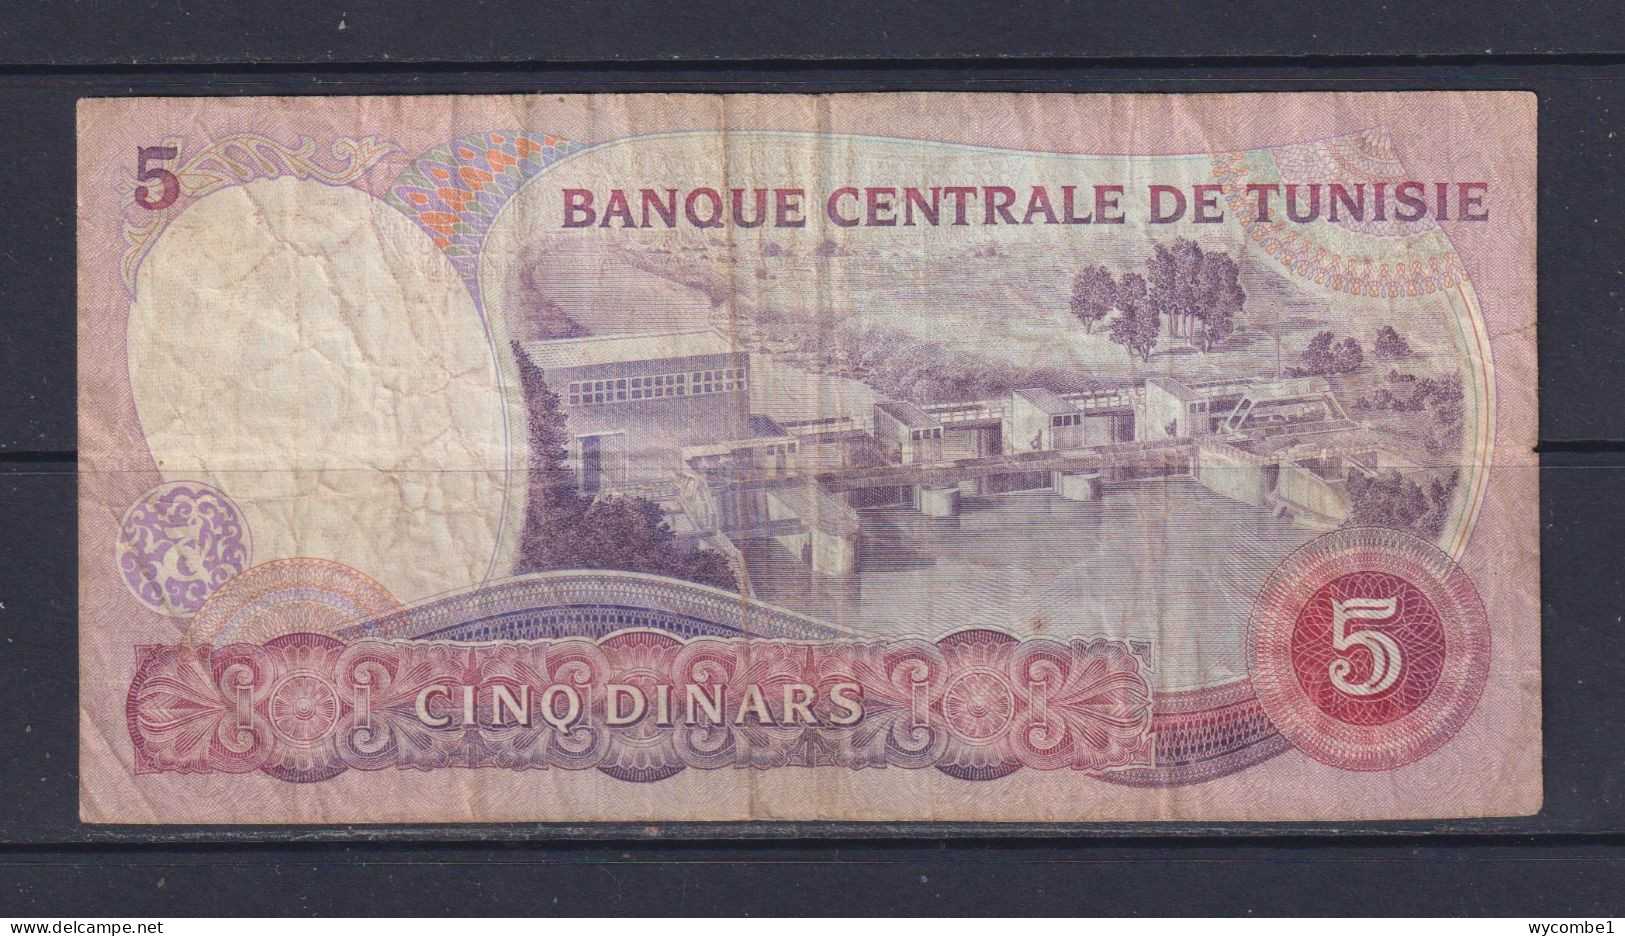 TUNISIA  -  1983 5 Dinars Circulated Banknote As Scans - Tunesien